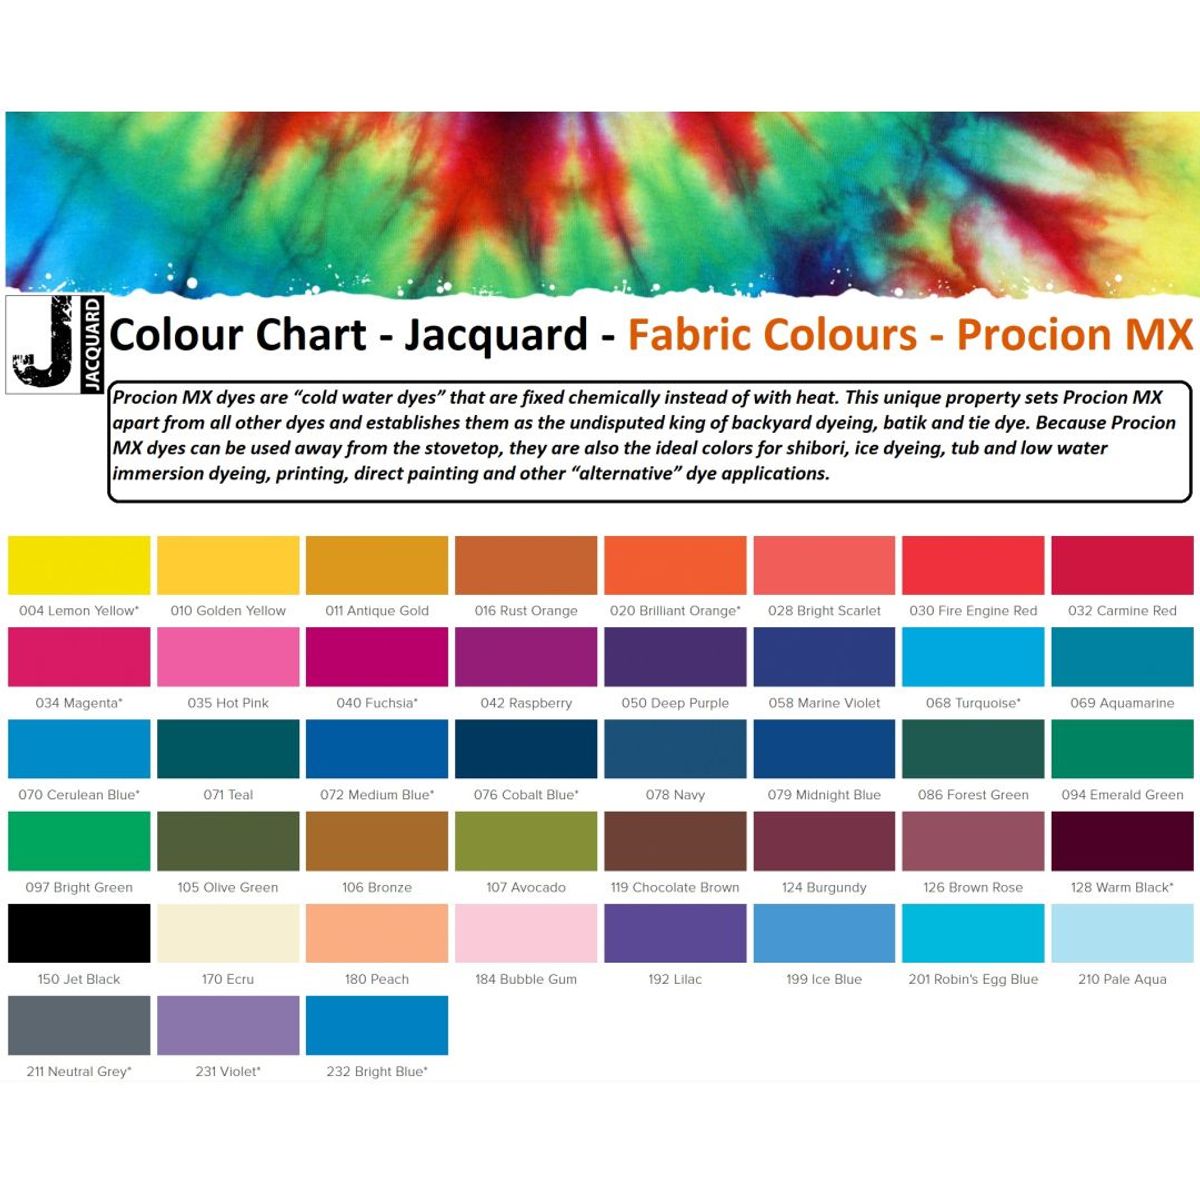 Jacquard - Procion MX Dye - Fabric Textile - Medium Blue 072